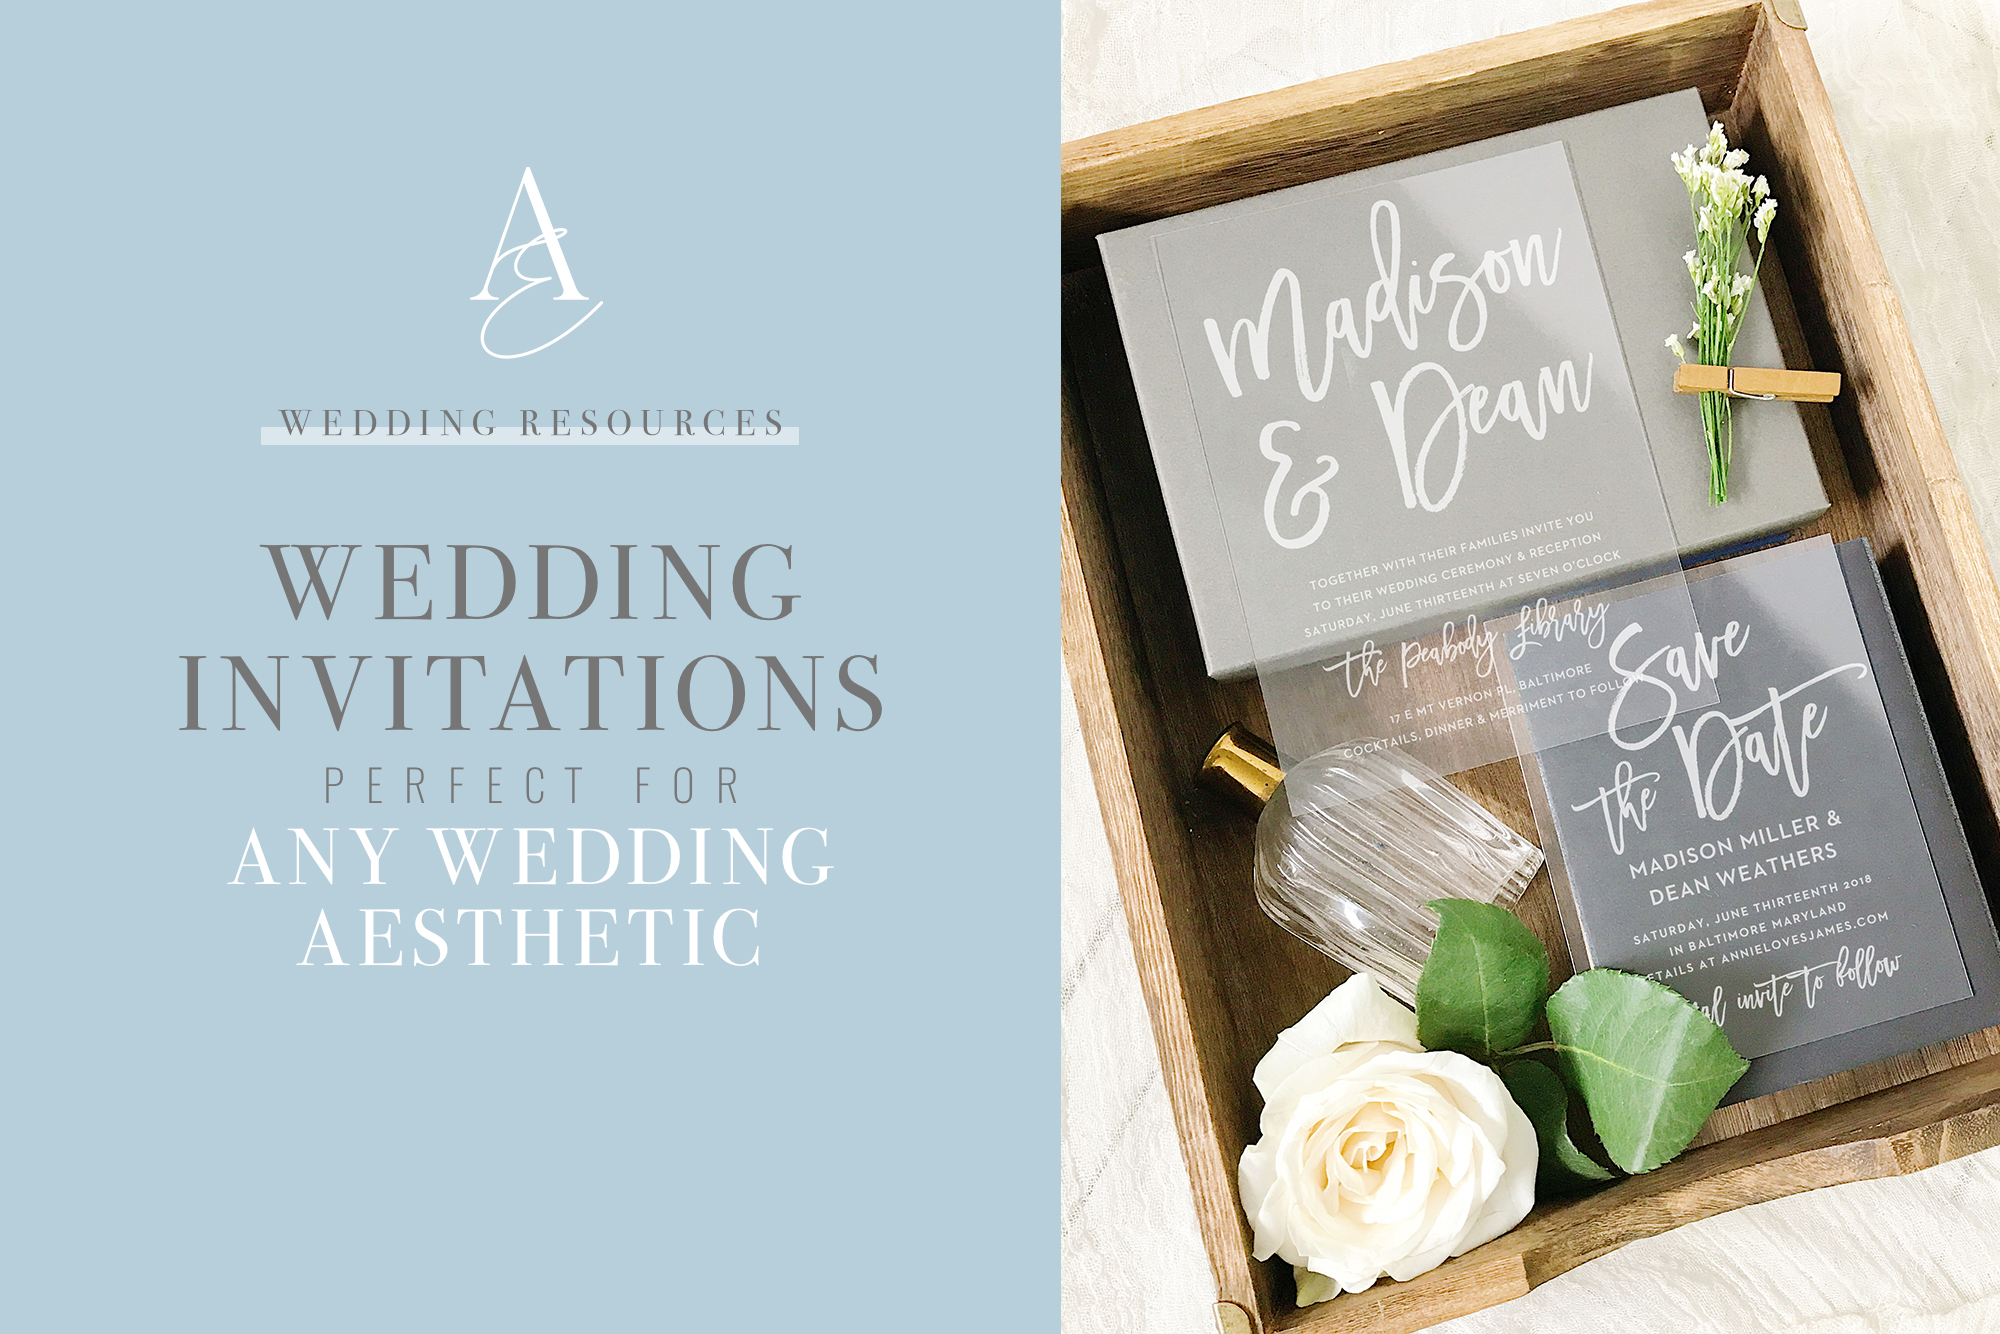 Graphic for Basic Invites wedding invitations.